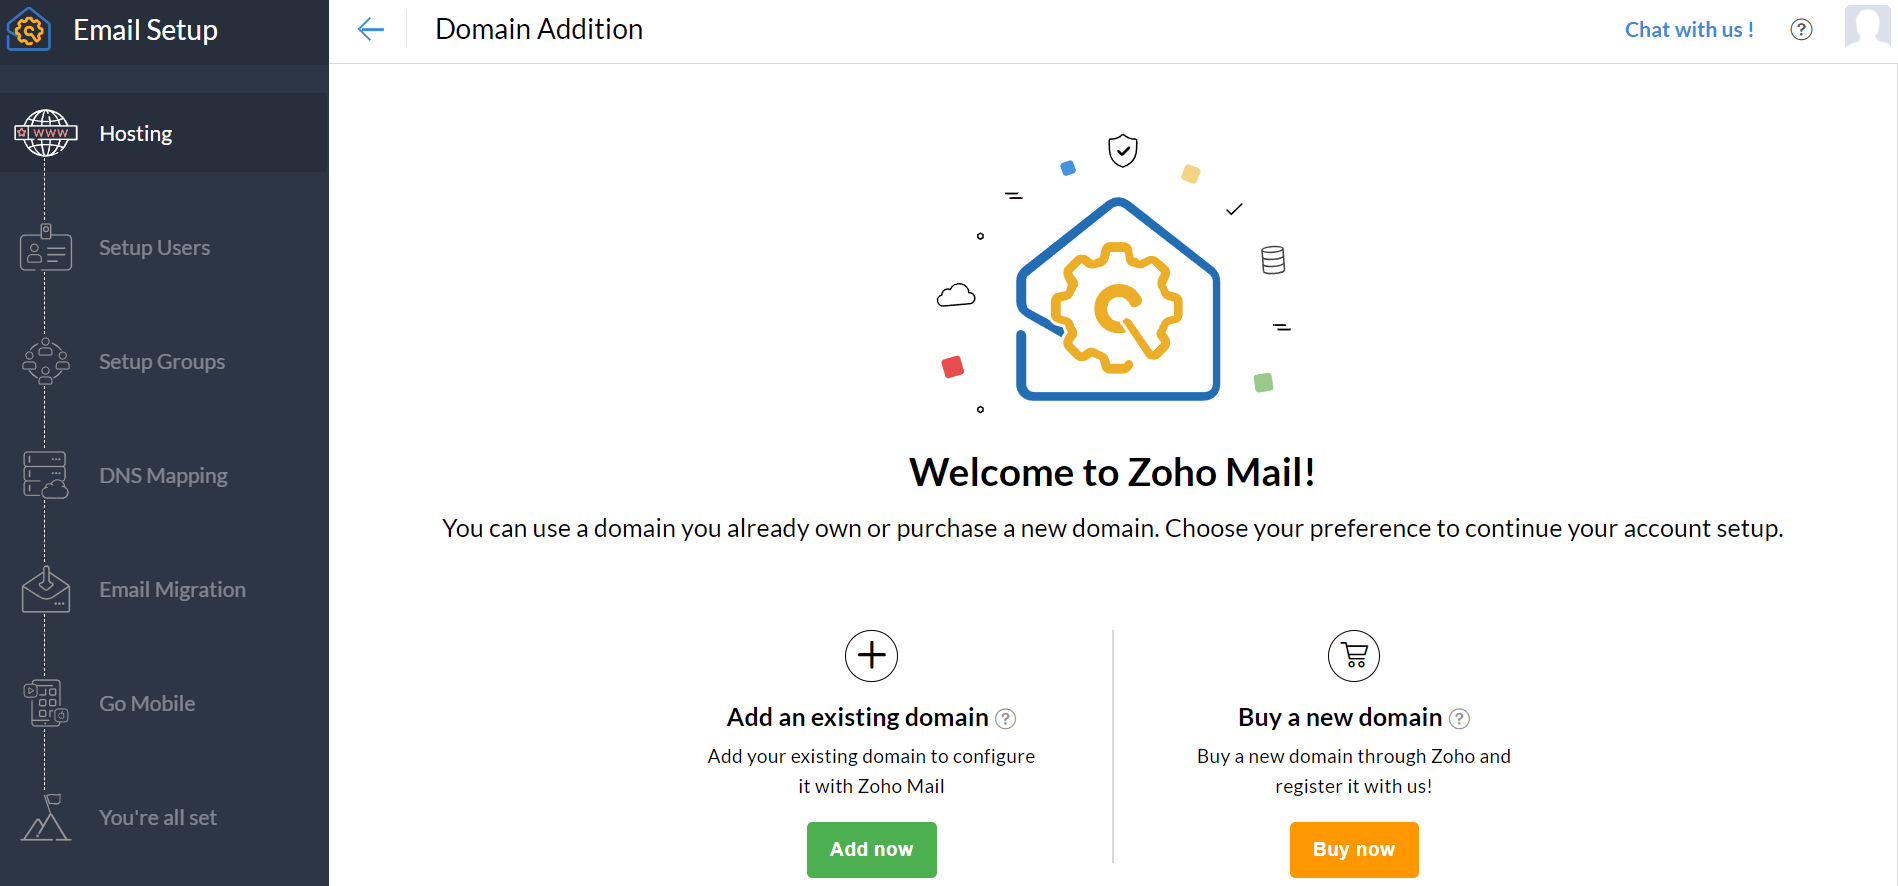 Choosing a domain through Zoho. 